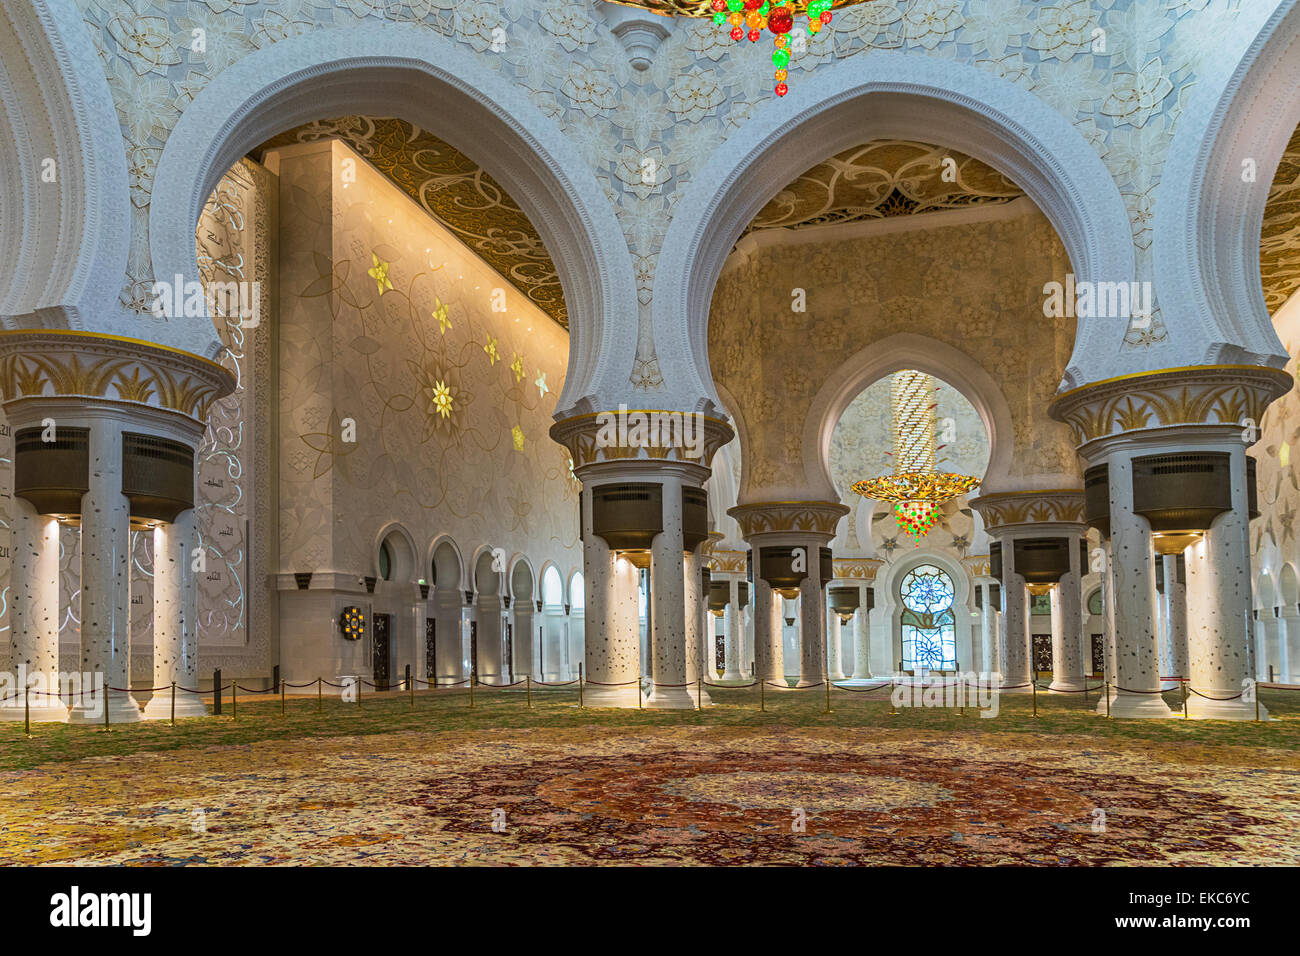 Sheikh Grand Mosque in Abu Dhabi Stock Photo